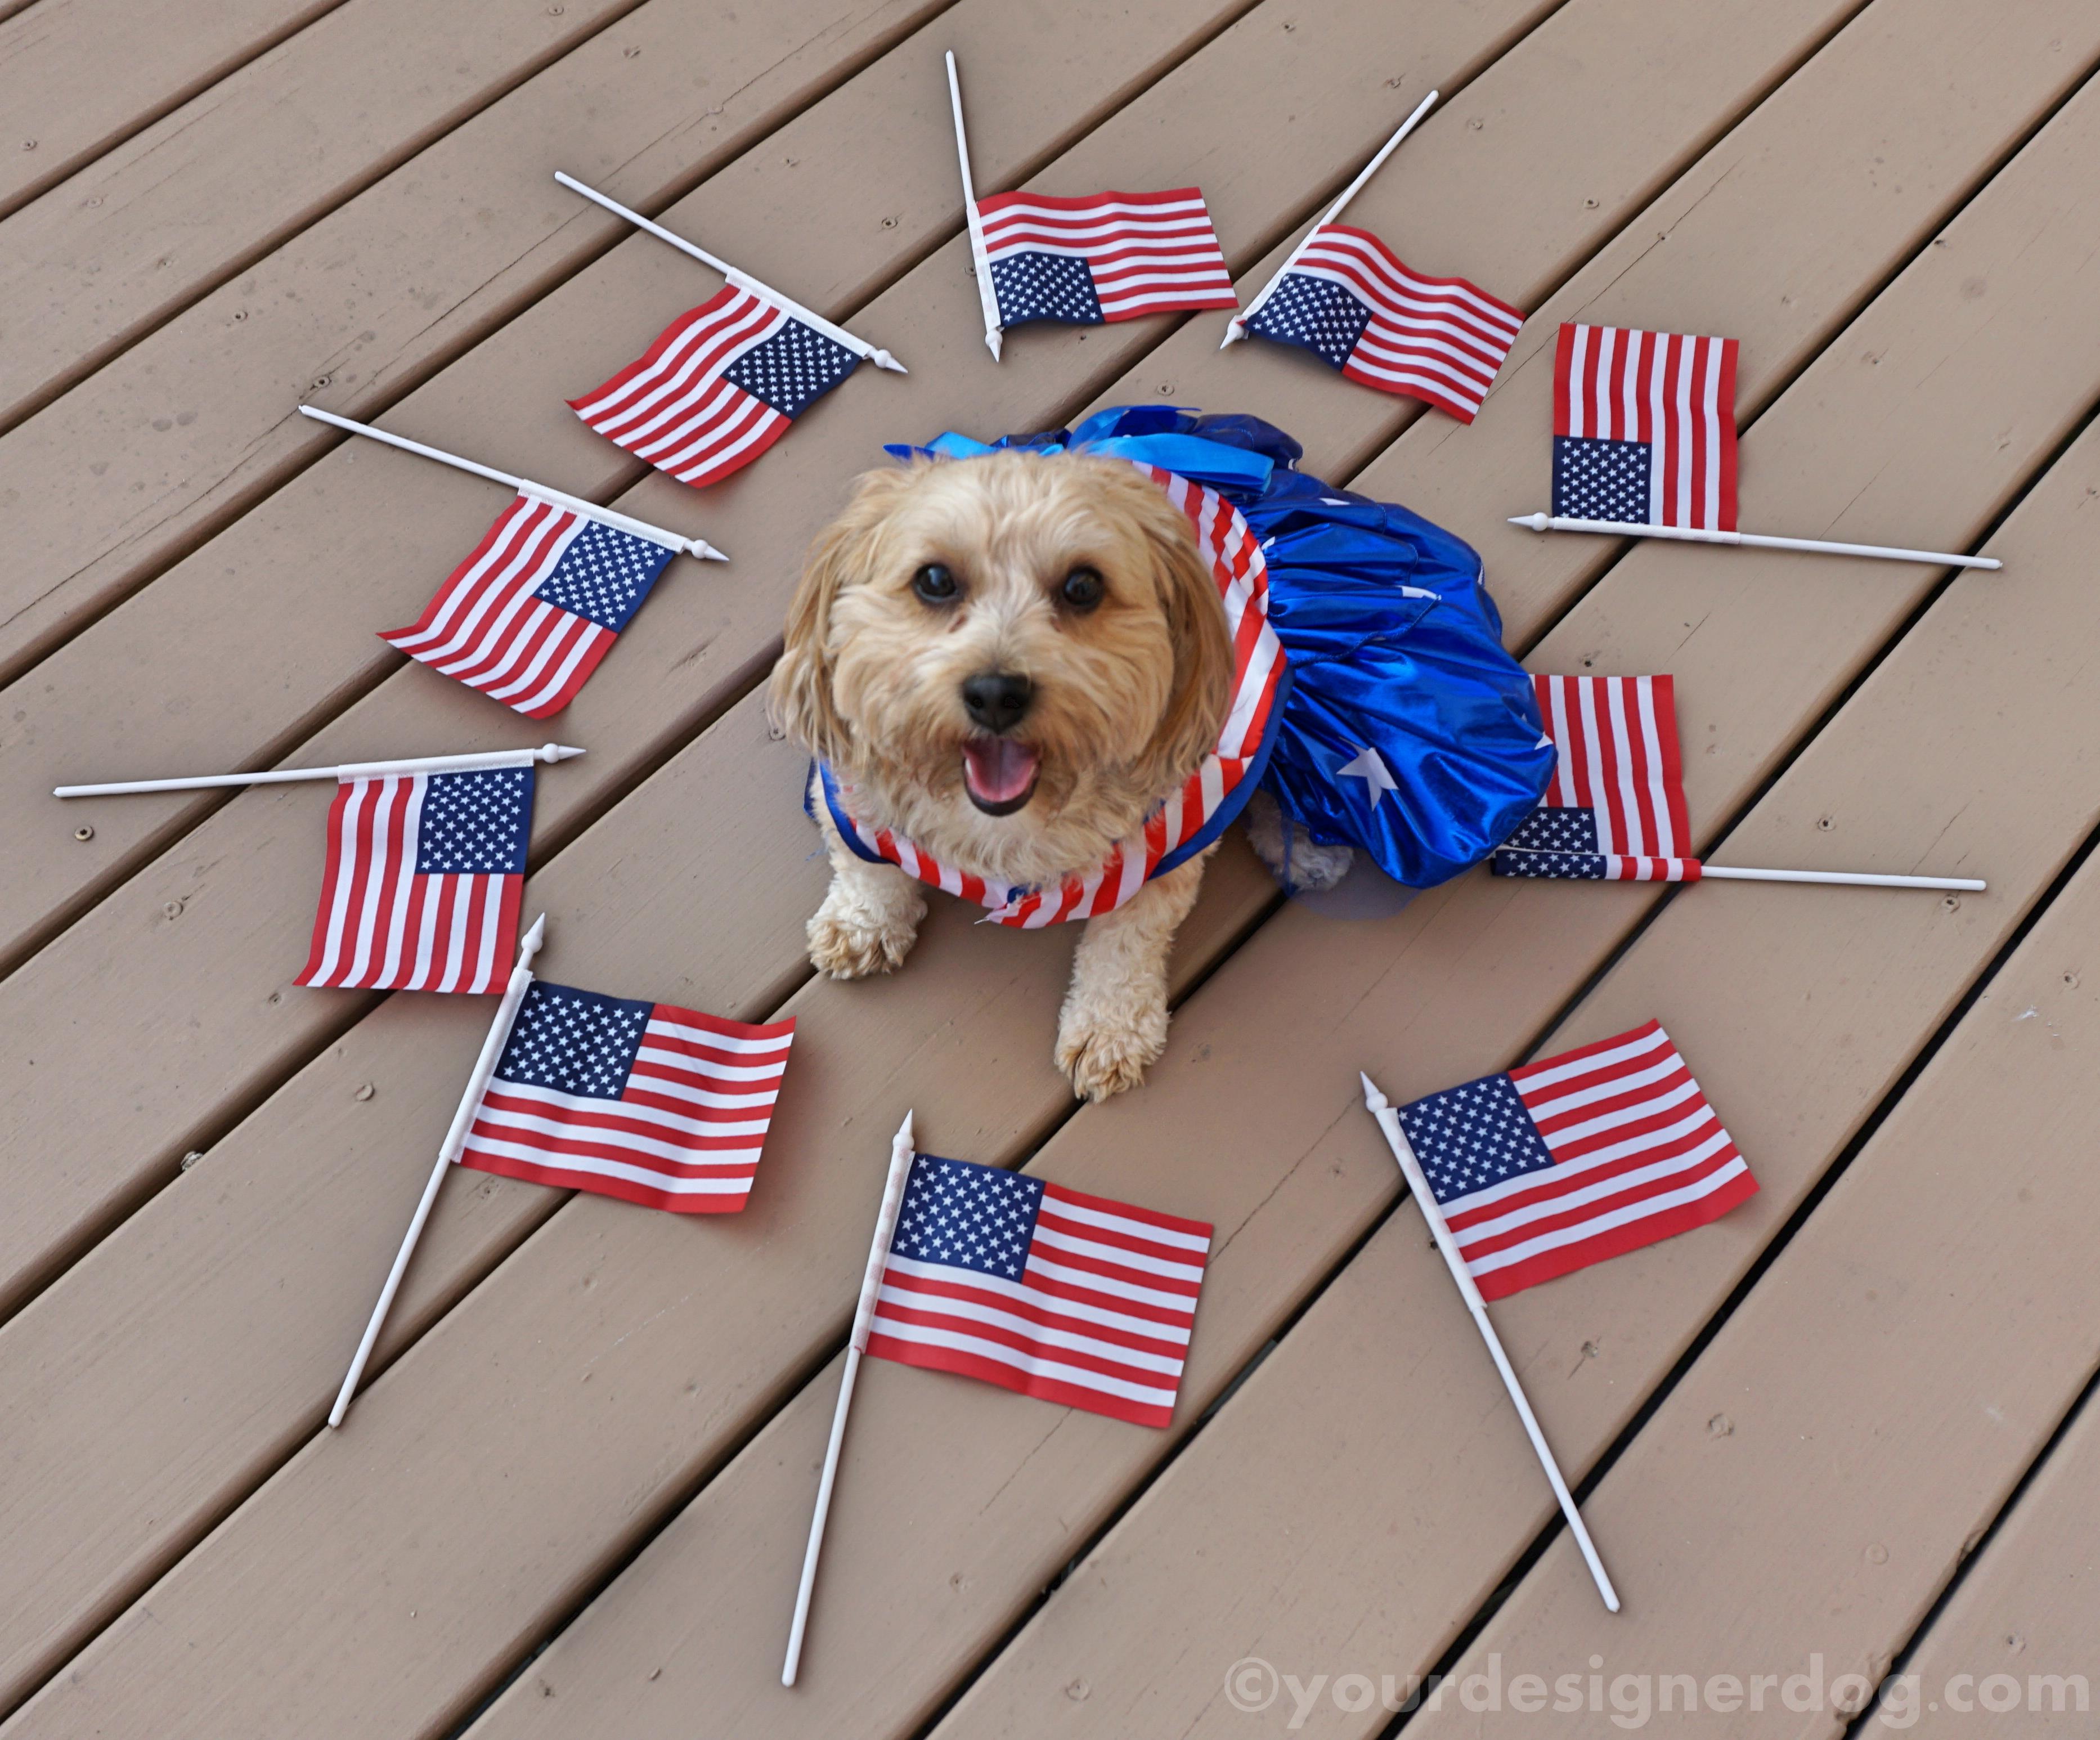 dogs, designer dogs, yorkipoo, yorkie poo, flag, patriotic, american, dog smiling